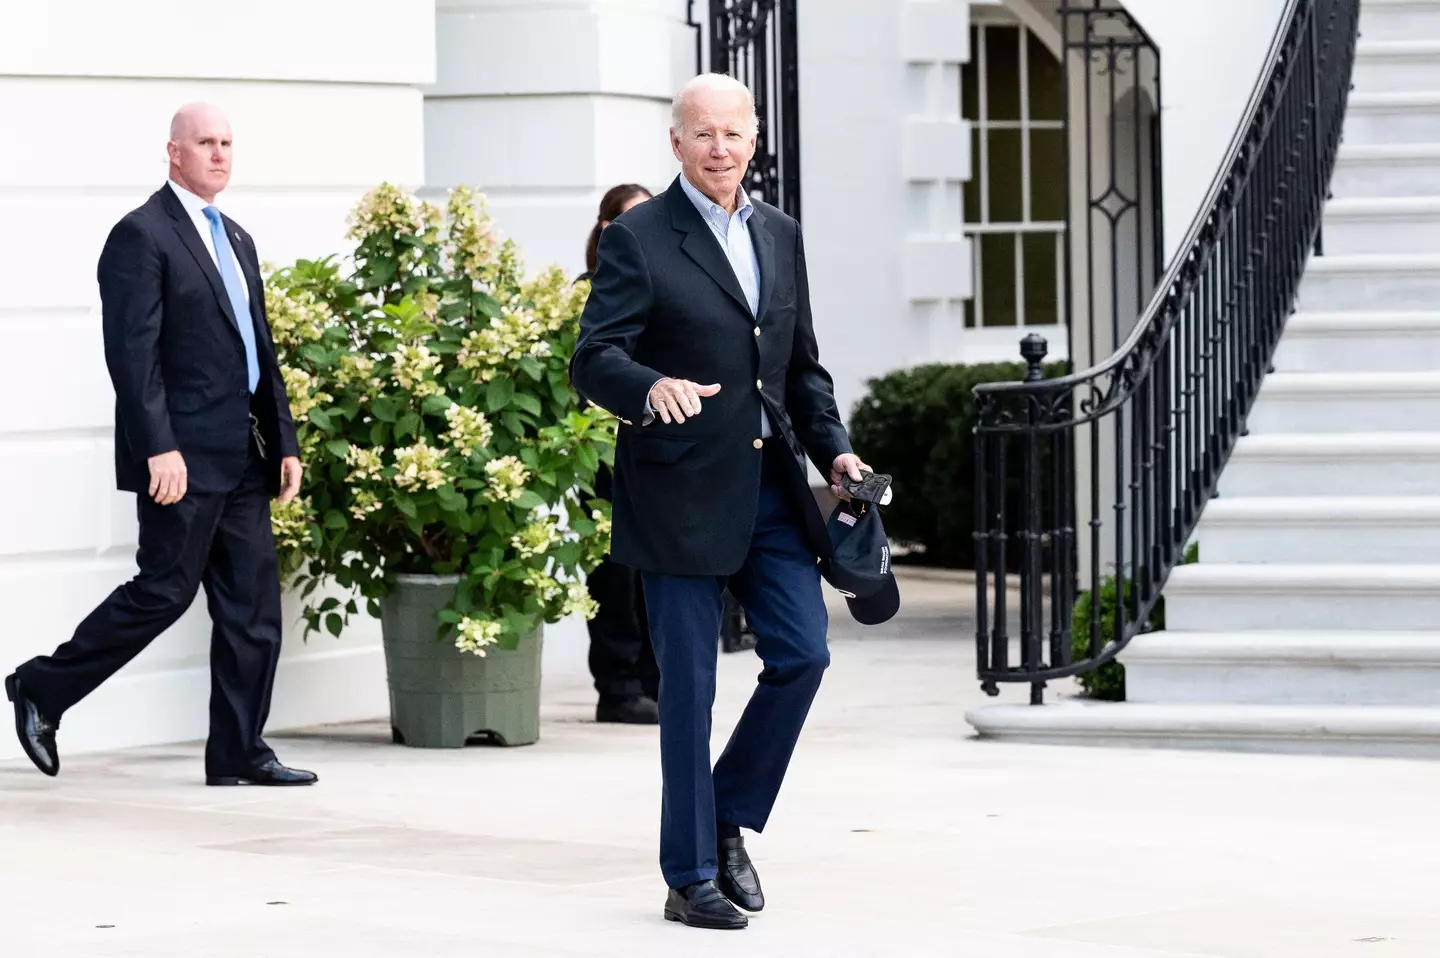 Joe Biden has previously said he believes his son Beau died in Iraq.